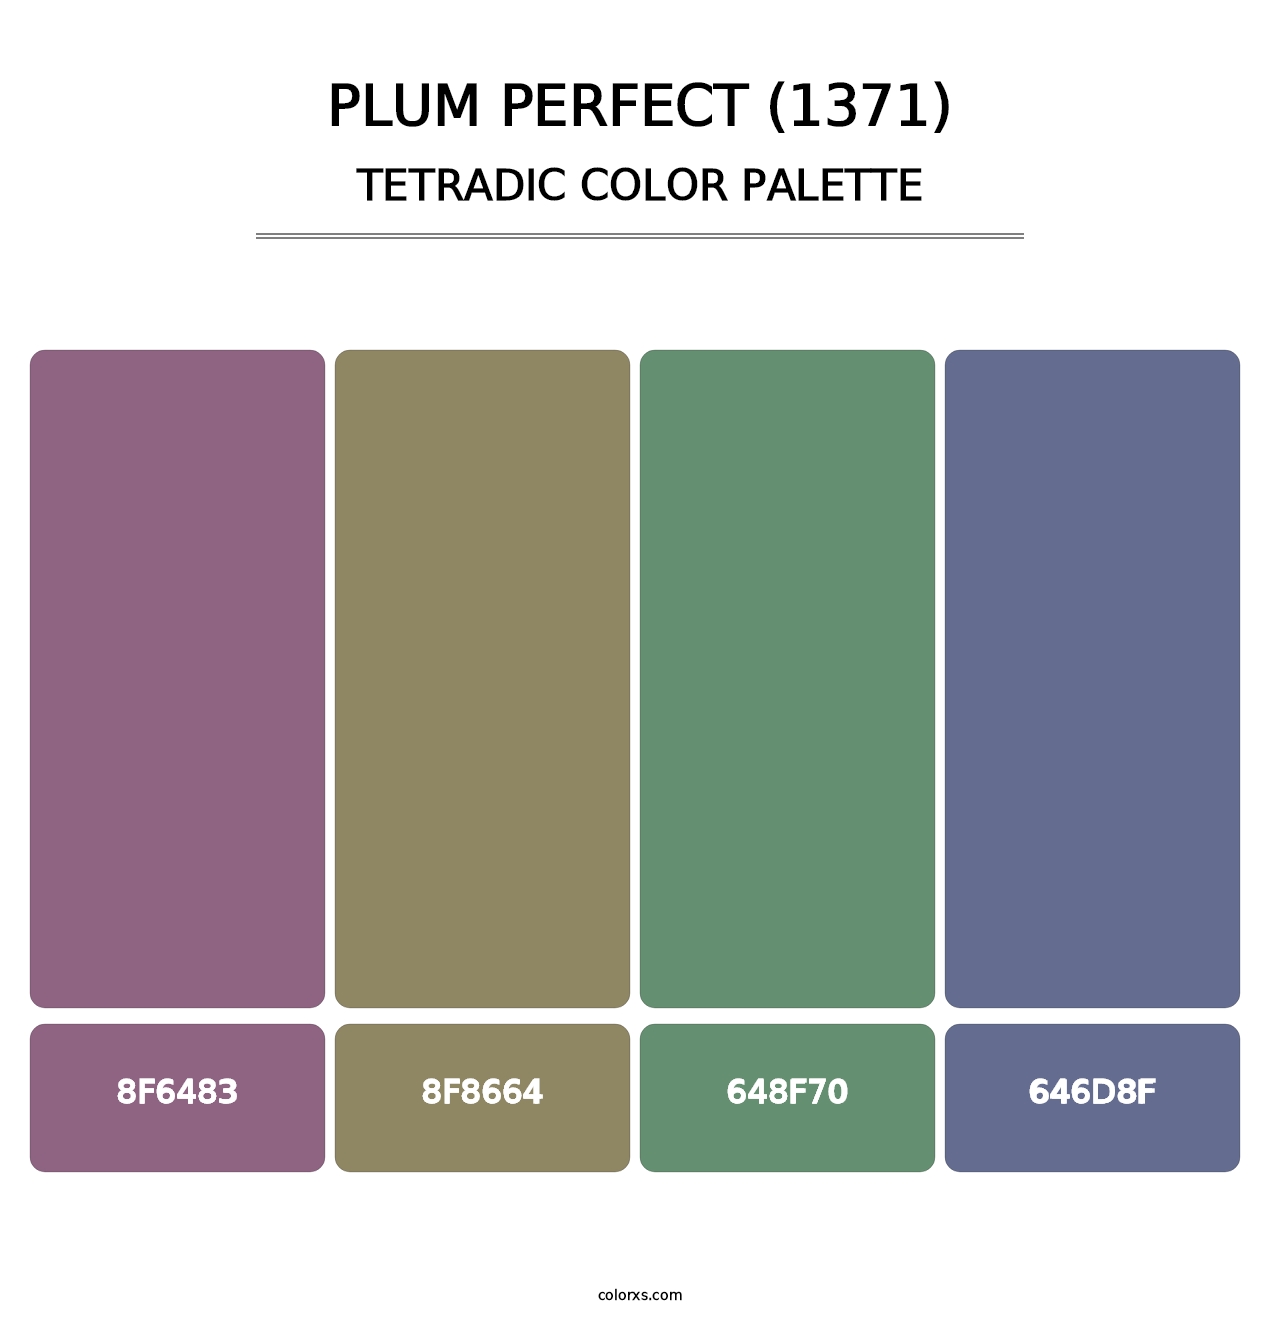 Plum Perfect (1371) - Tetradic Color Palette